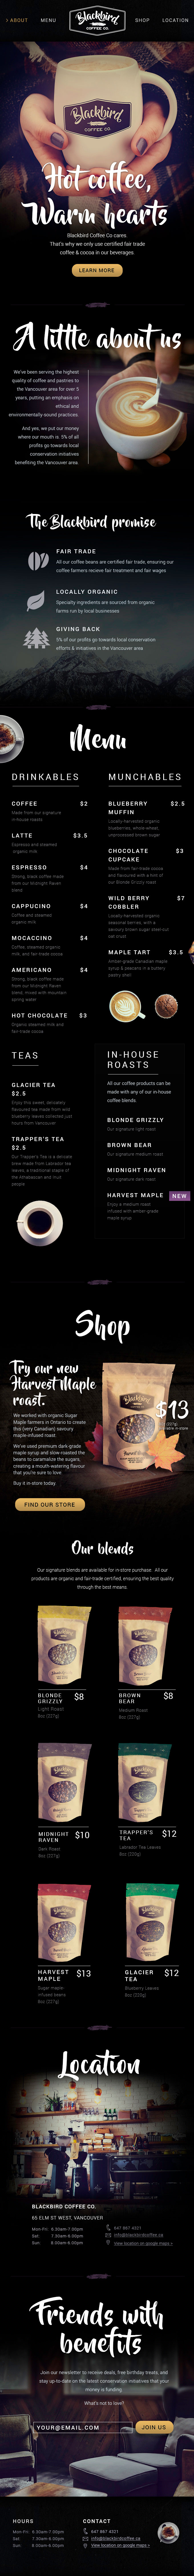 Blackbird Coffee Co. tablet layout